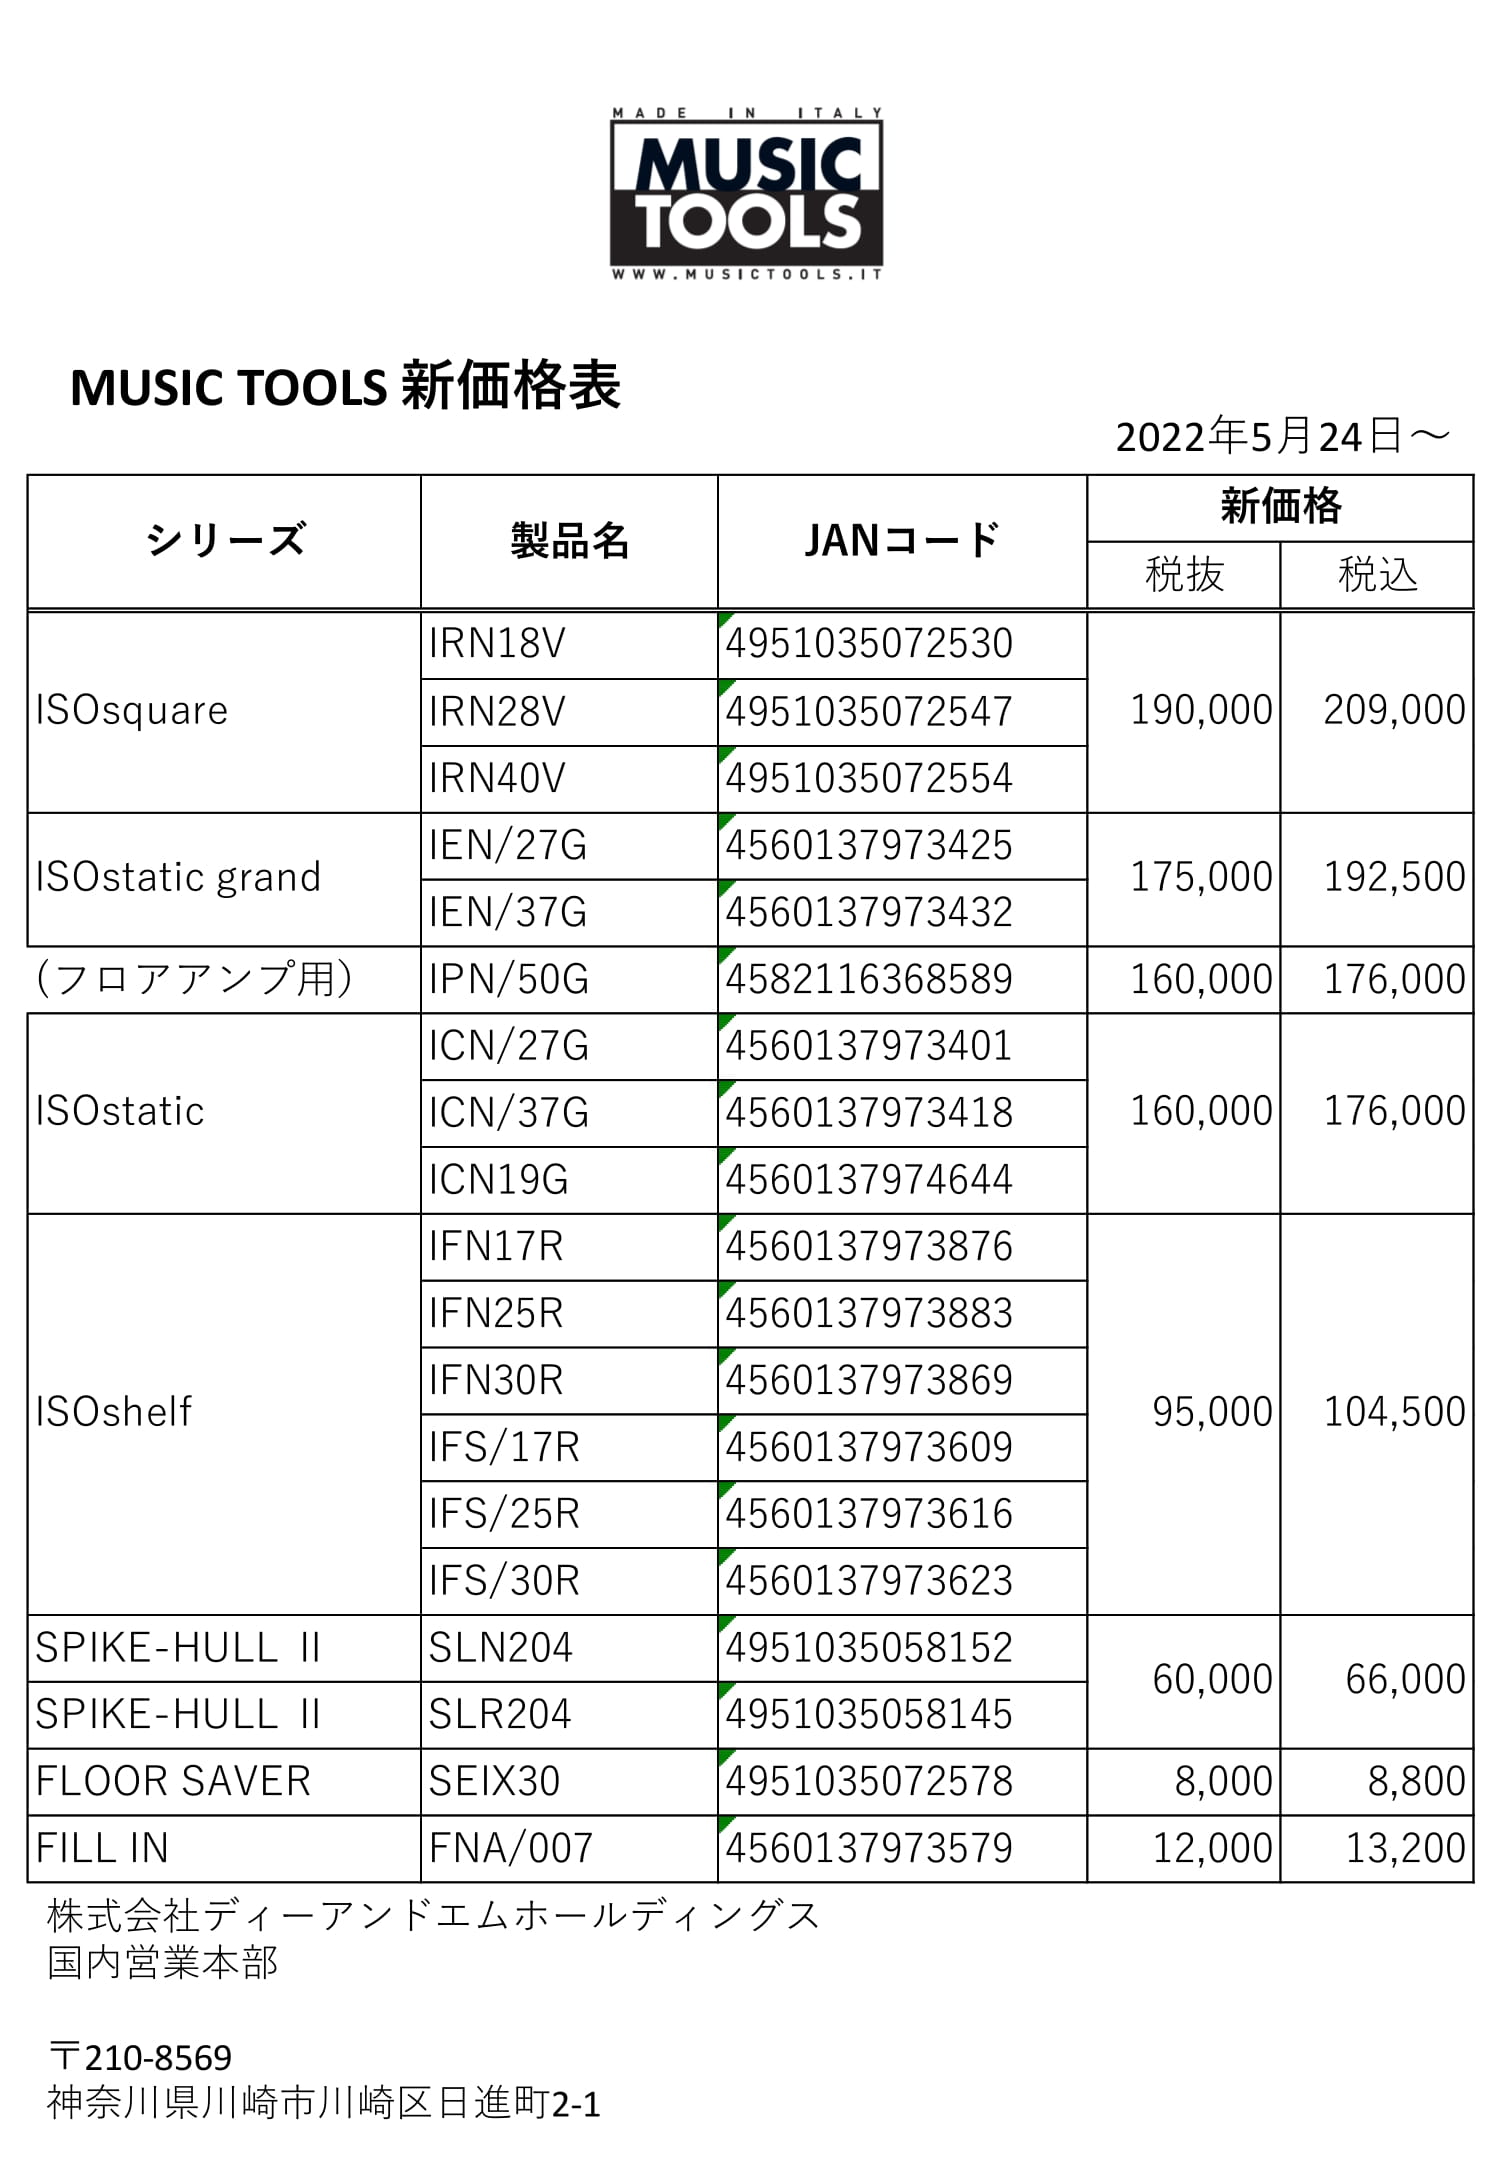 MUSIC TOOLS価格改訂通知2022Apr18リスト付-2